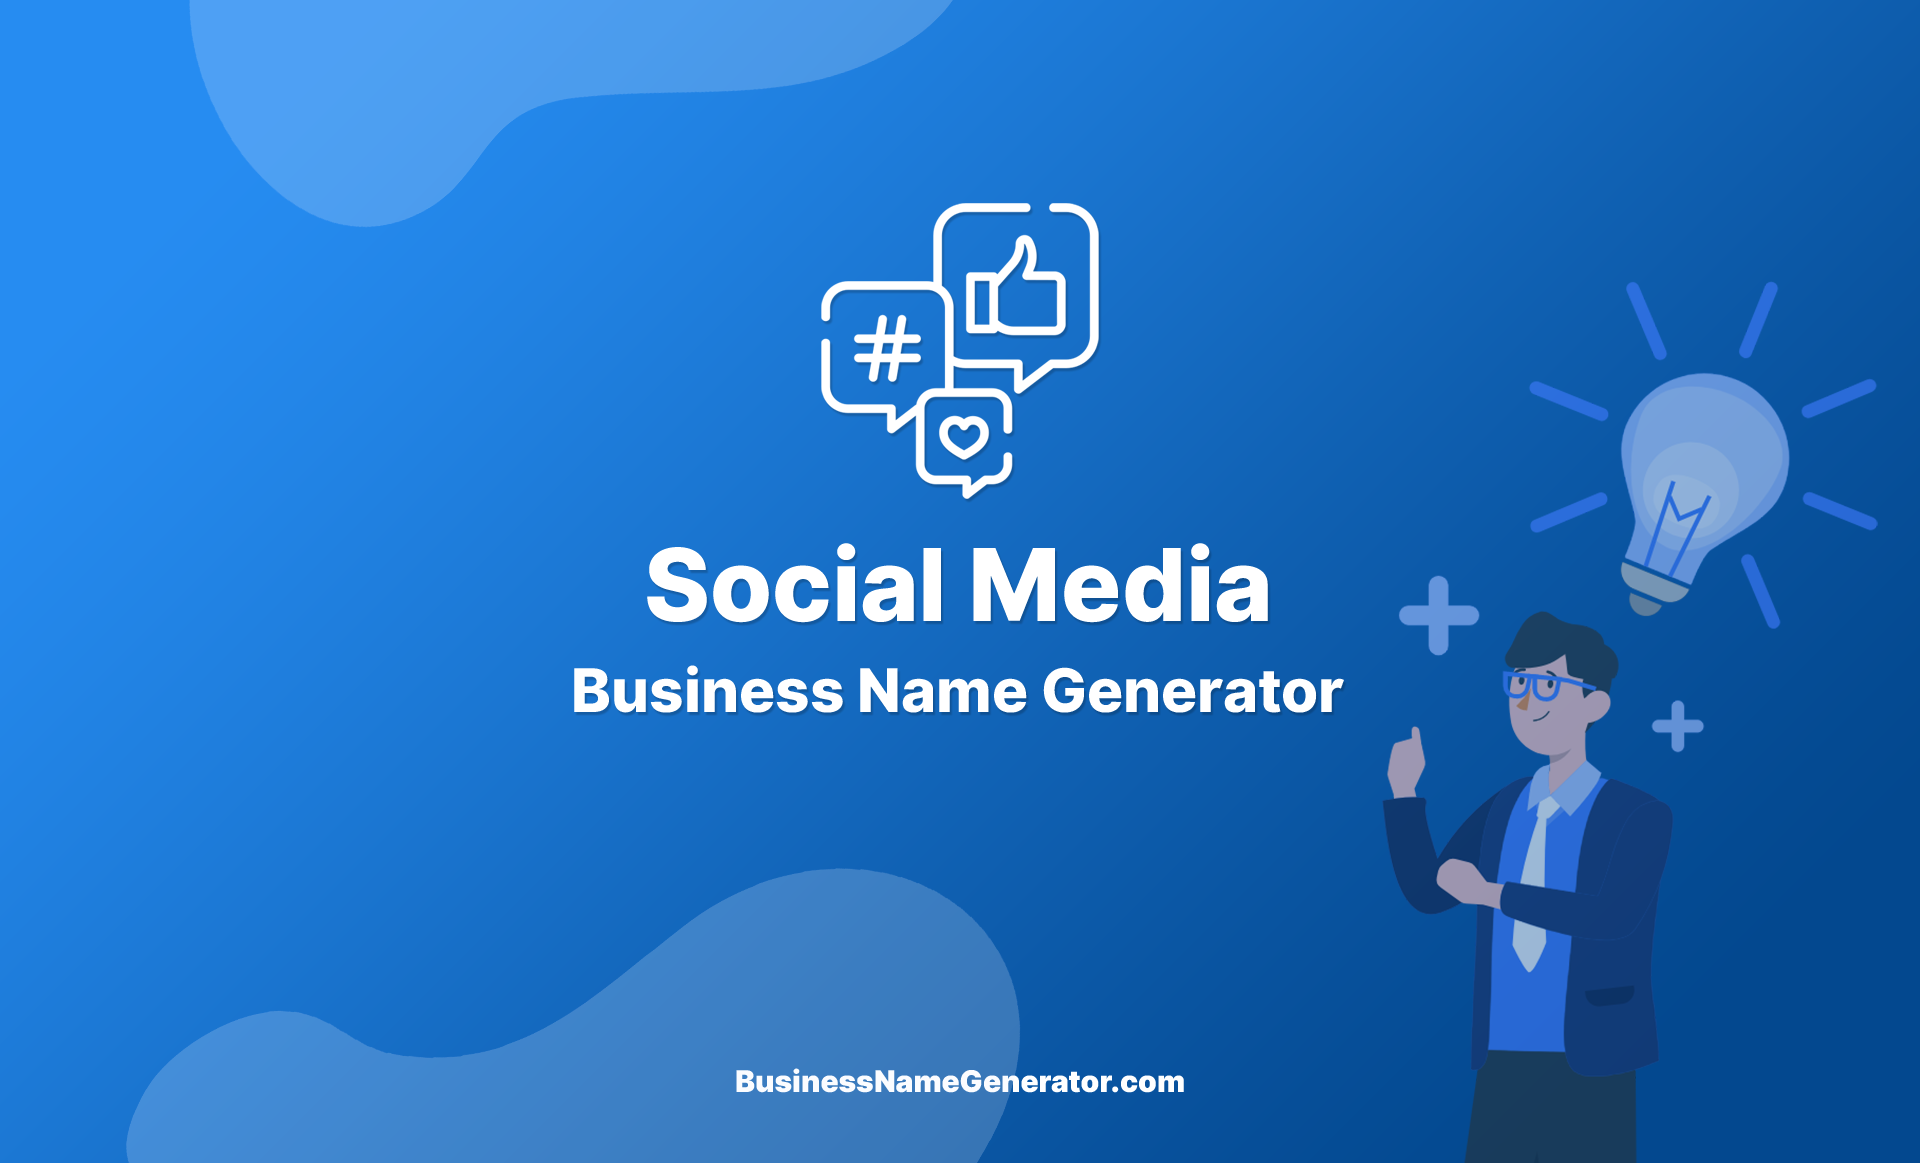 Social Media Business Name Generator Guide & Ideas